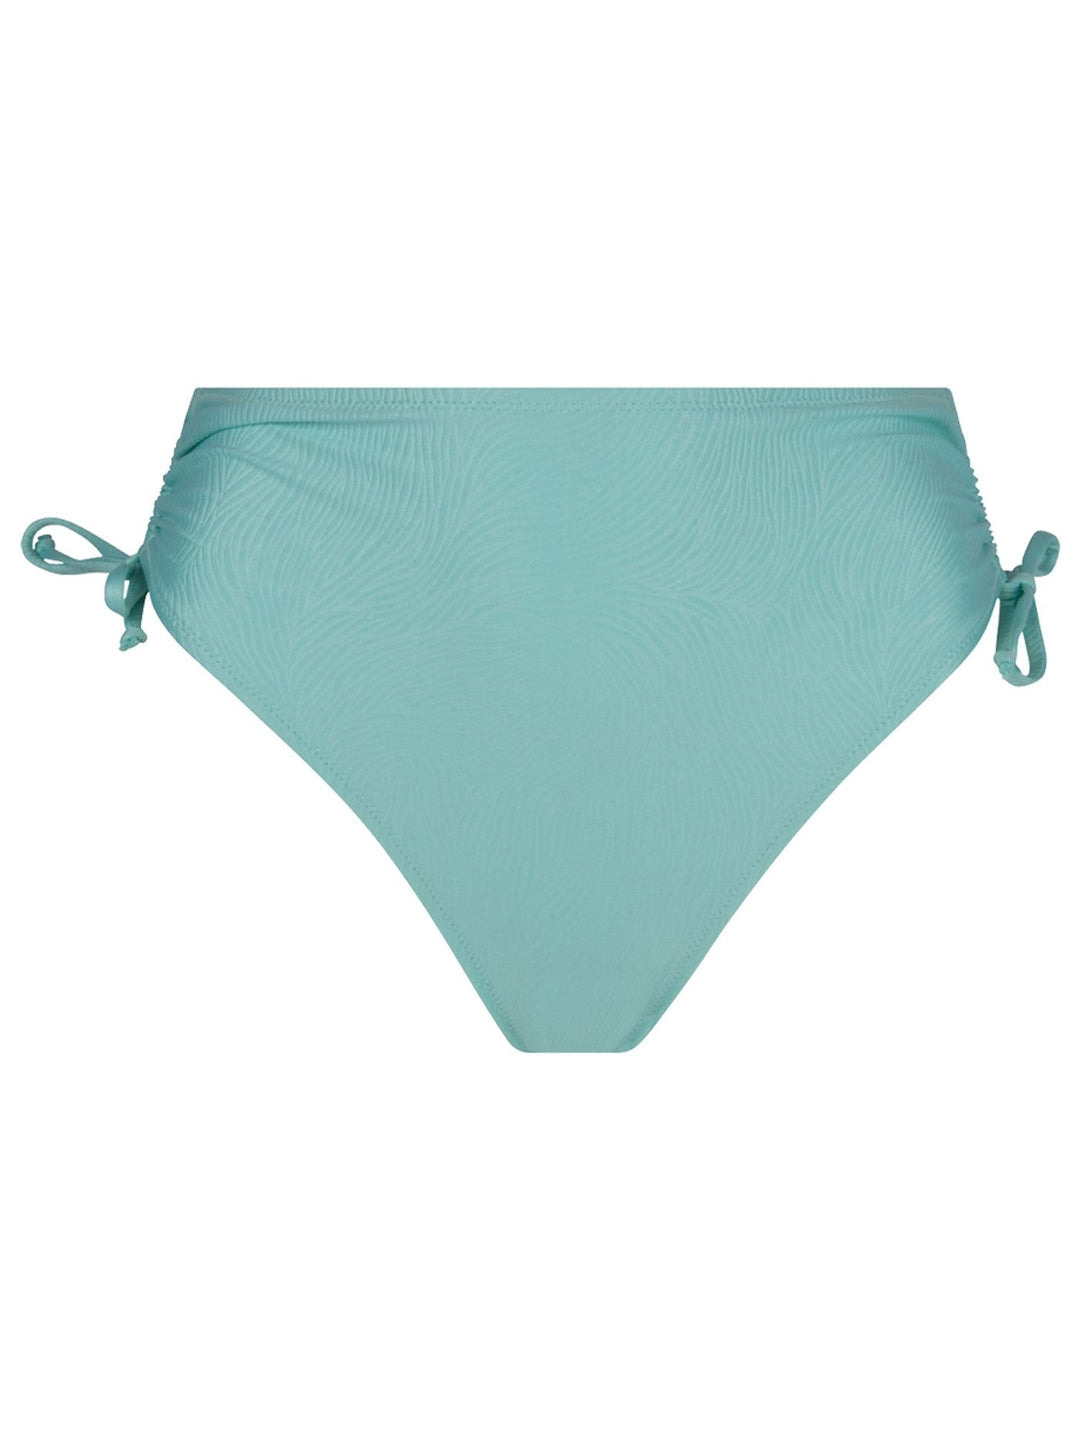 Antigel by Lise Charmel - La Muse Des Vagues Classic Side Ties Bikini Bottom Vague Acqua Full Bikini Brief Antigel by Lise Charmel Swimwear 